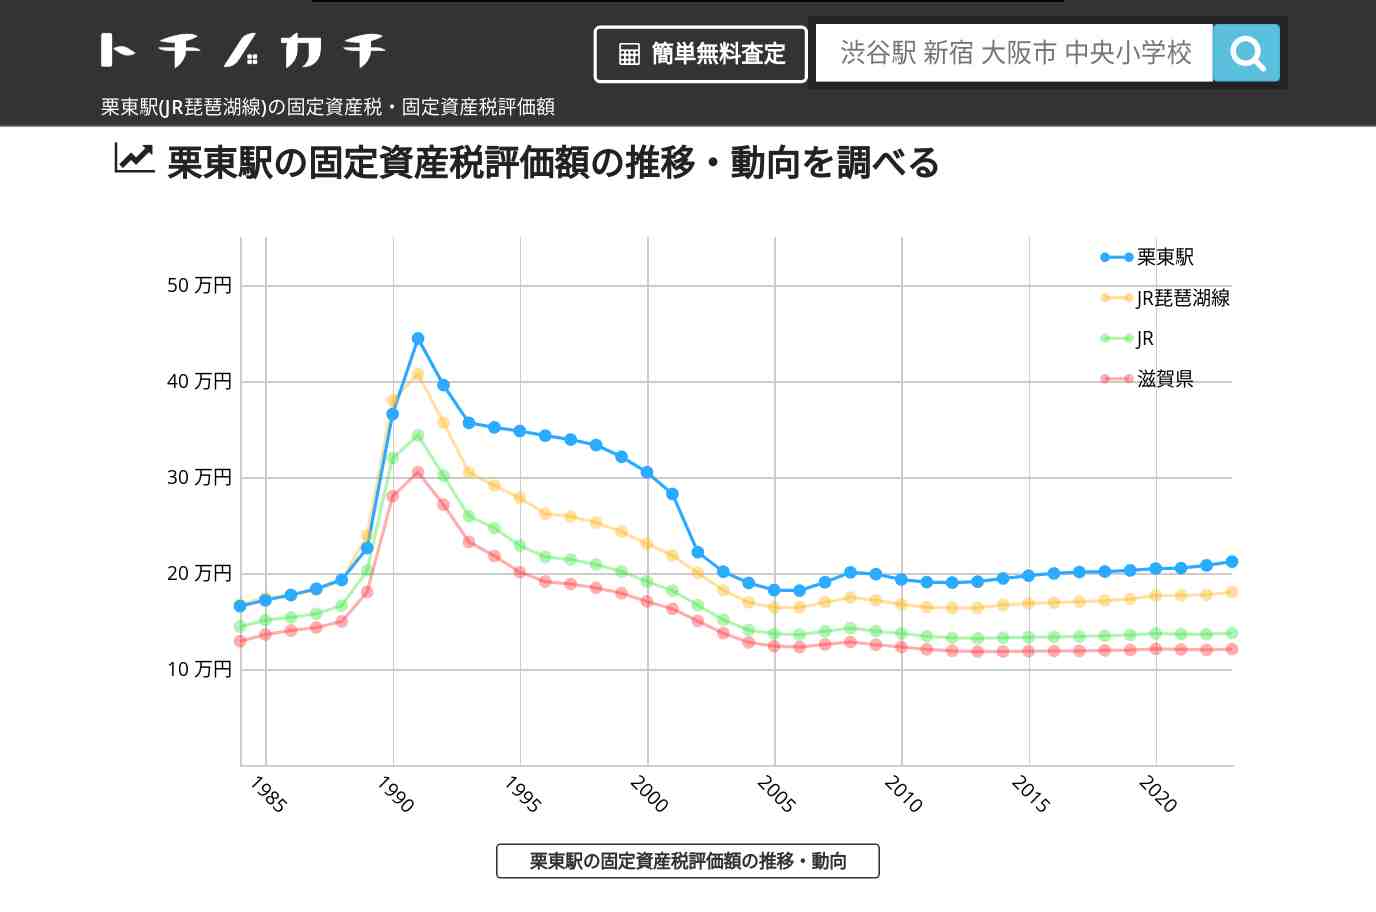 栗東駅(JR琵琶湖線)の固定資産税・固定資産税評価額 | トチノカチ